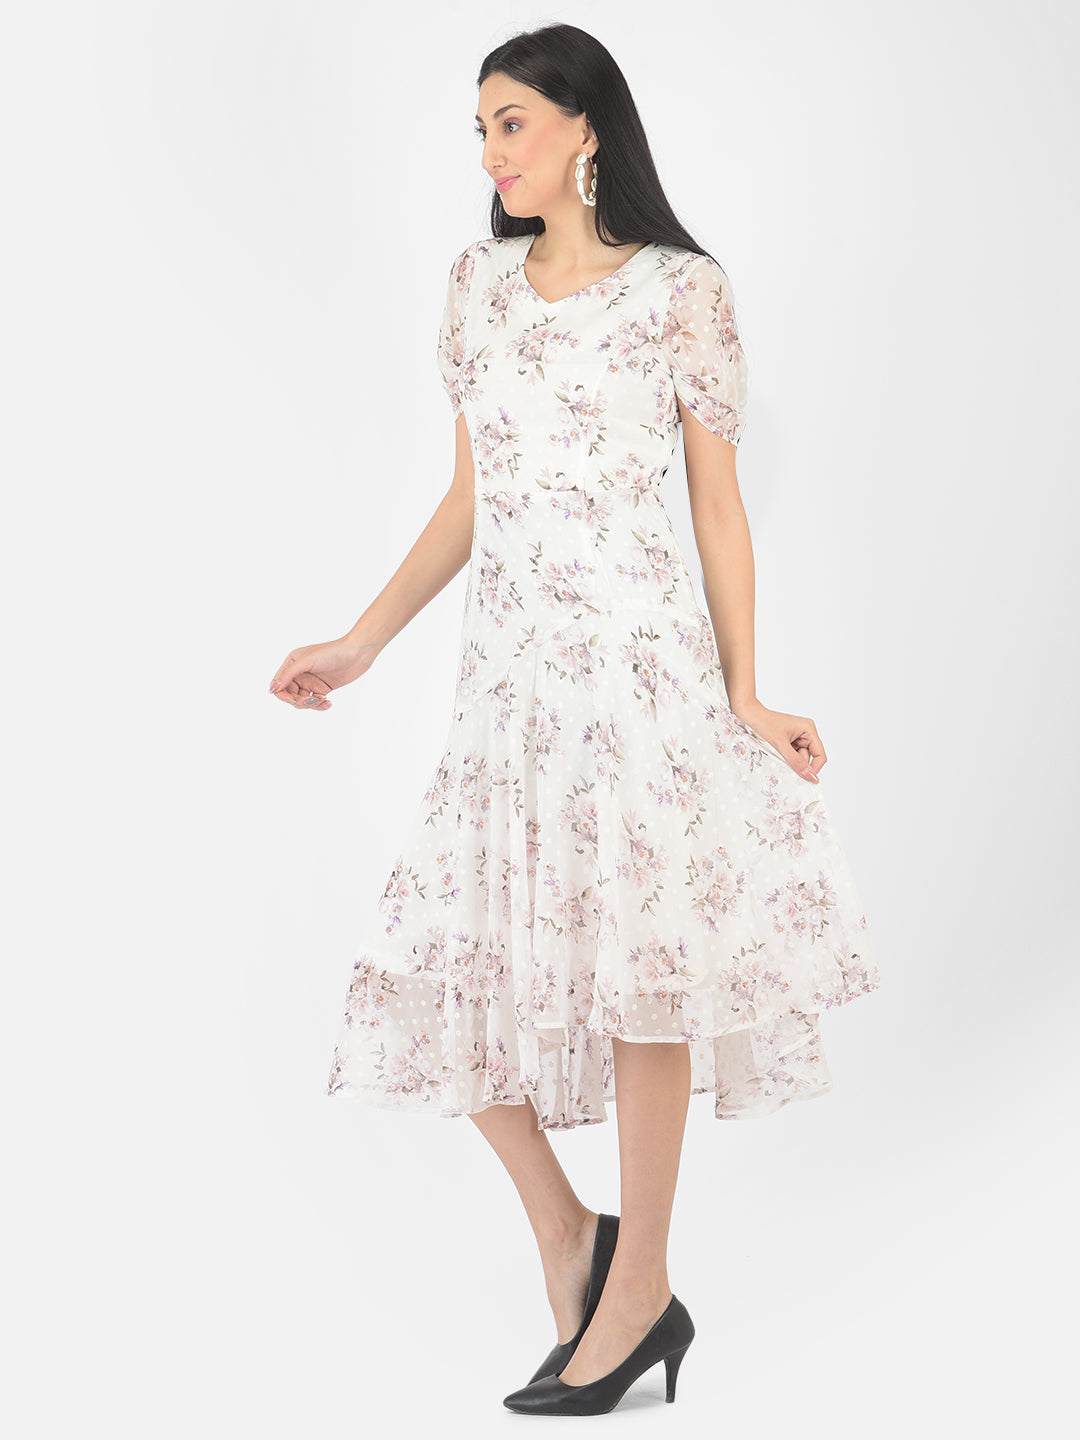 Ivory Half Sleeve A-Line Floral Dress